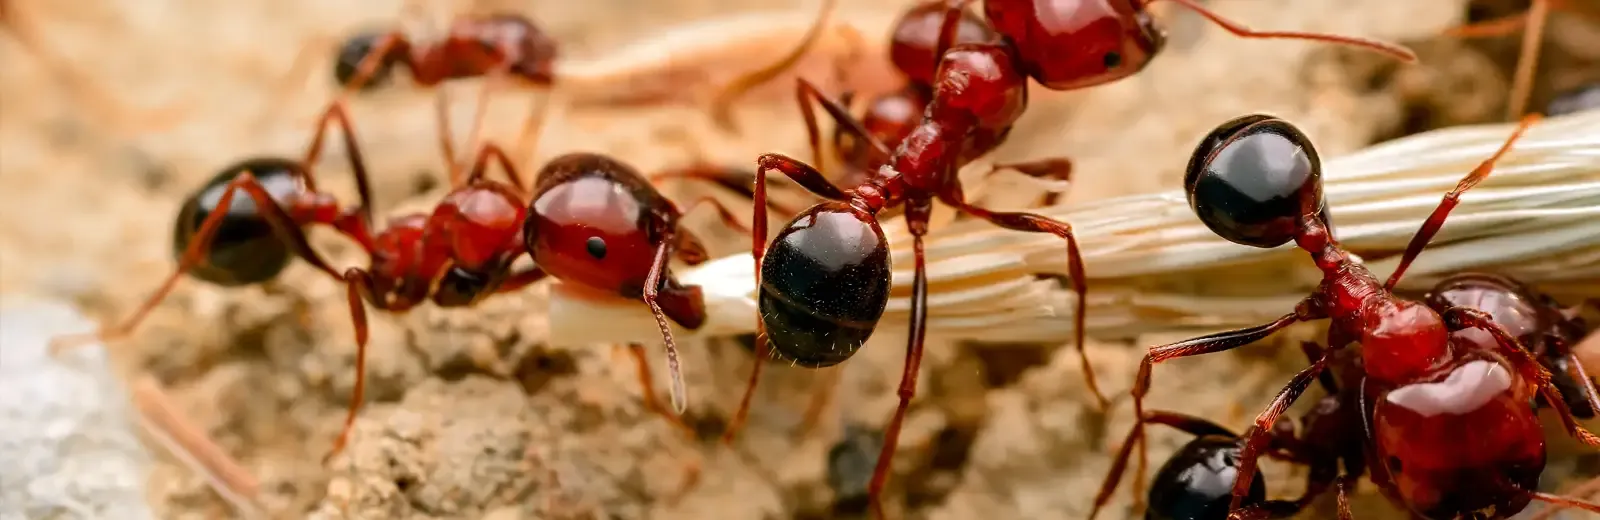 ants on ground, pest control